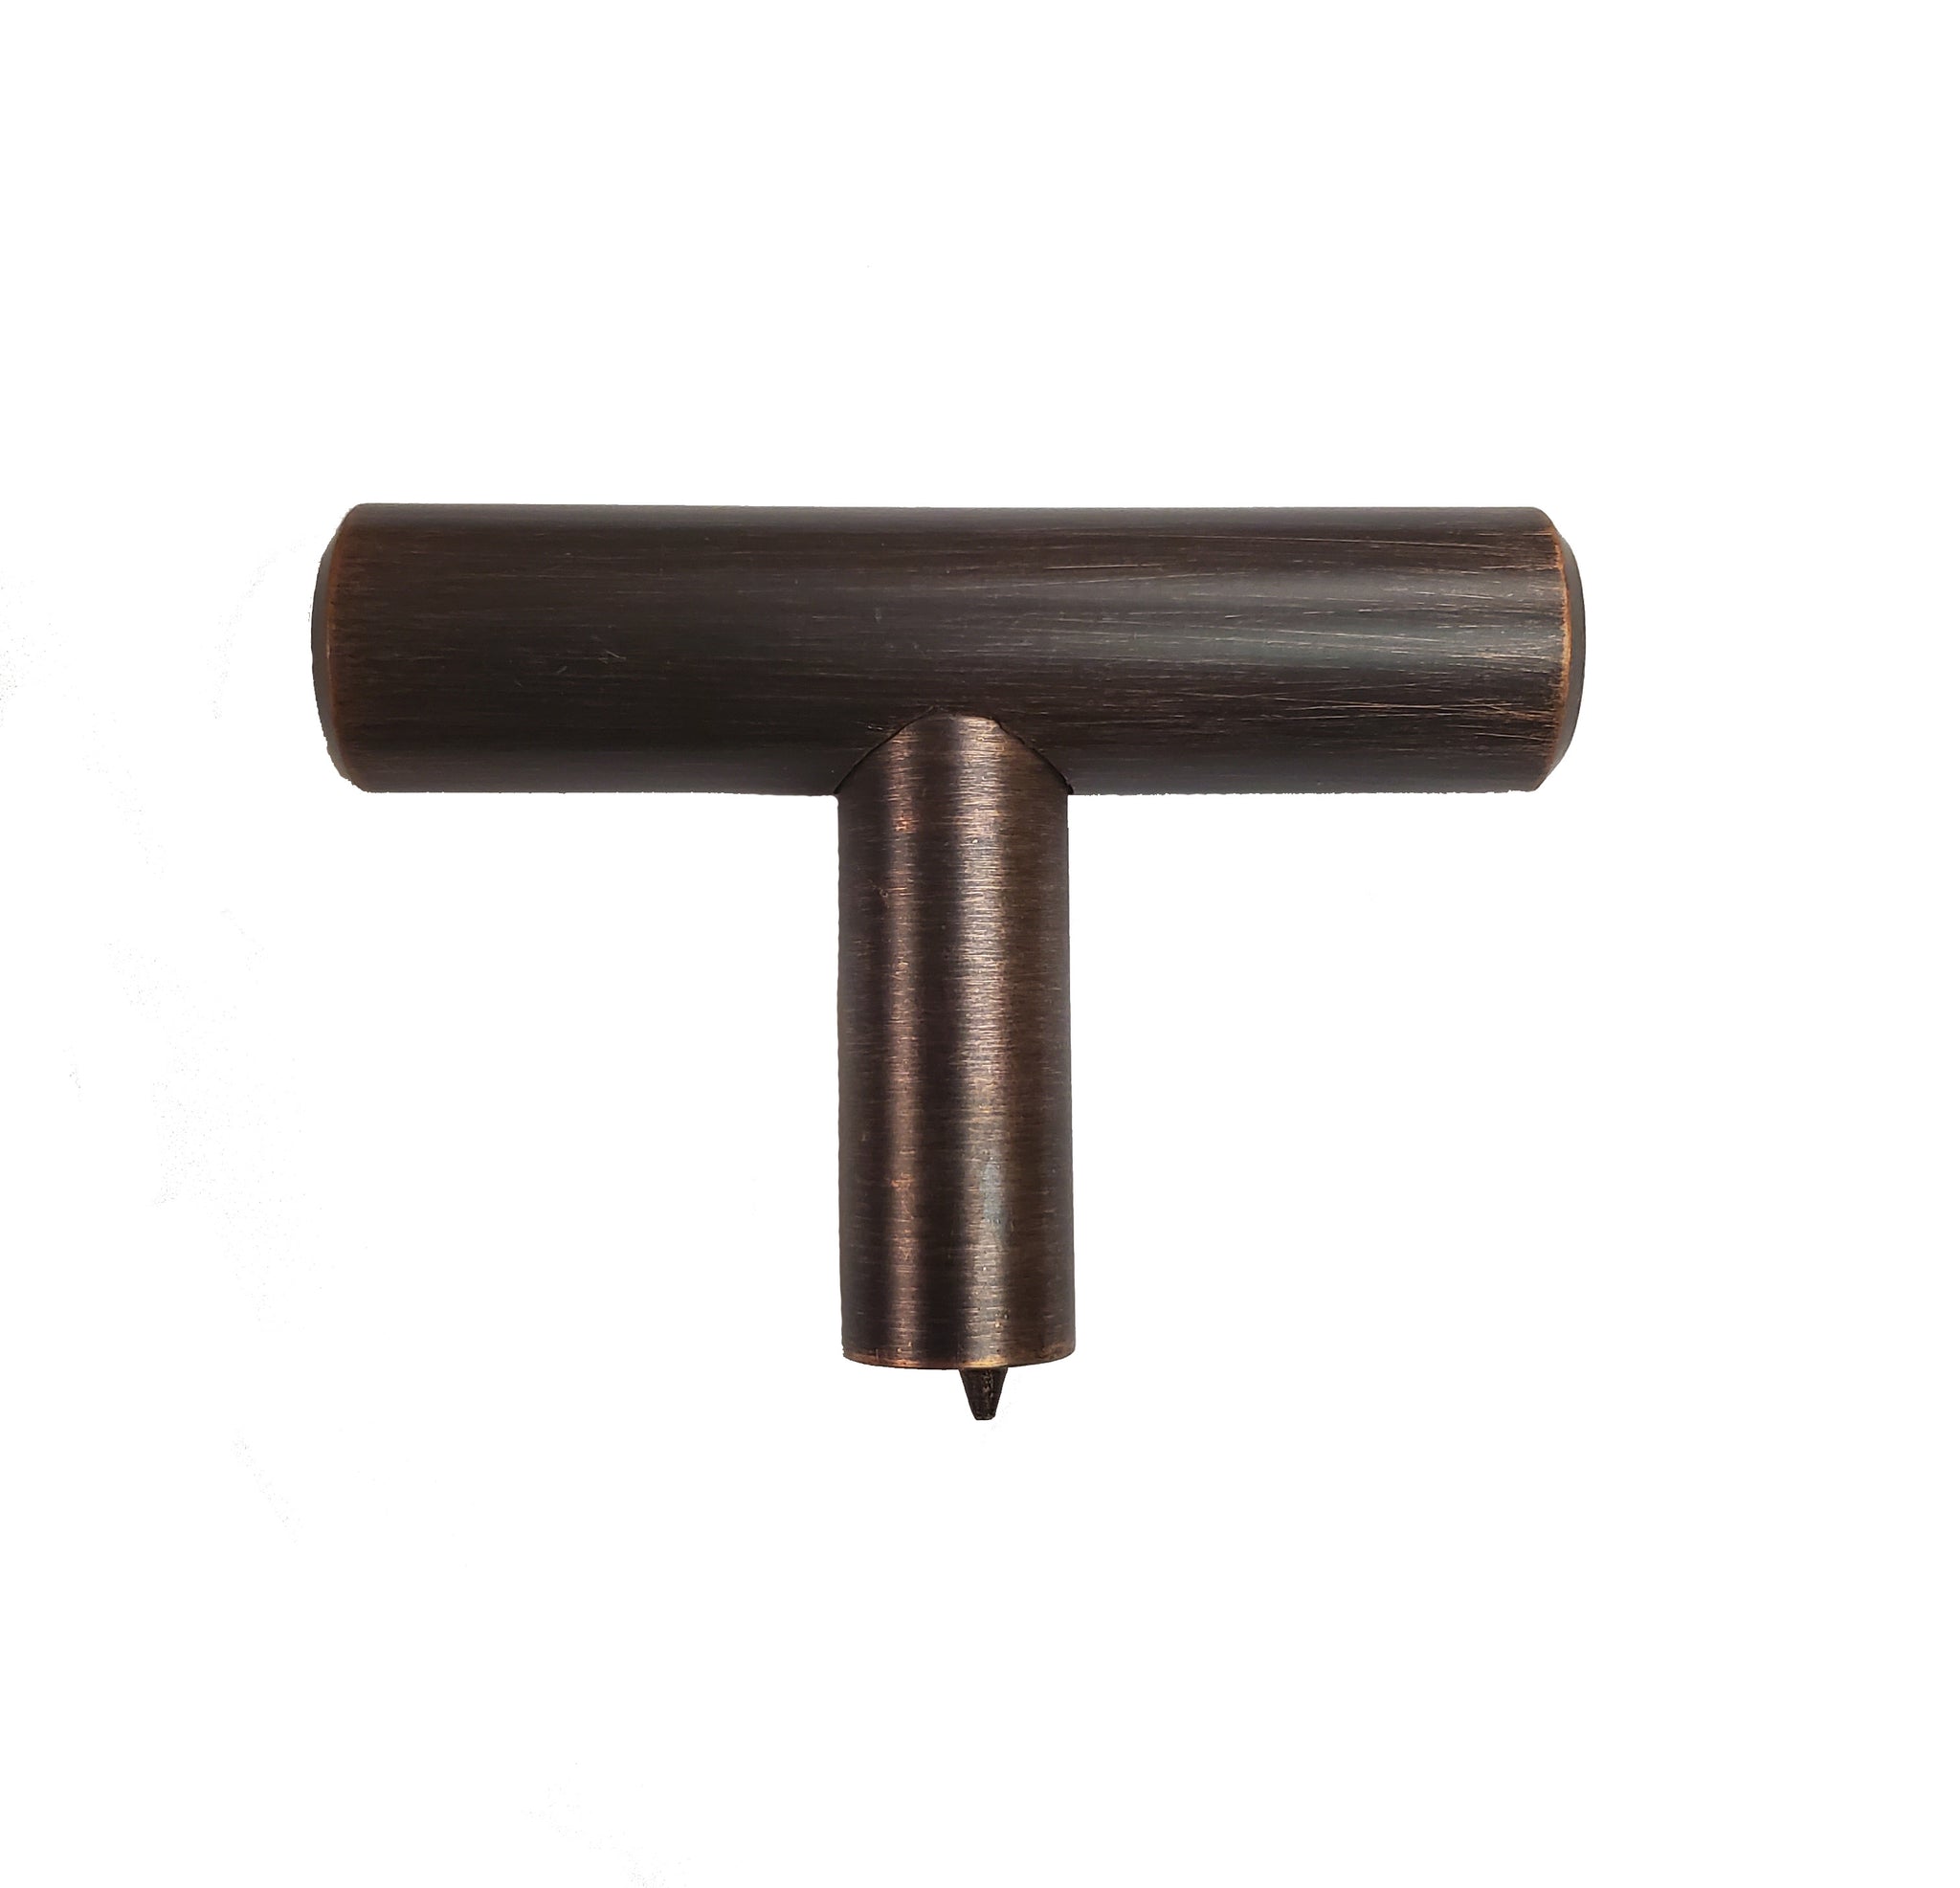 12mm Diameter Bar Pulls- Brushed Oil Rubbed Bronze